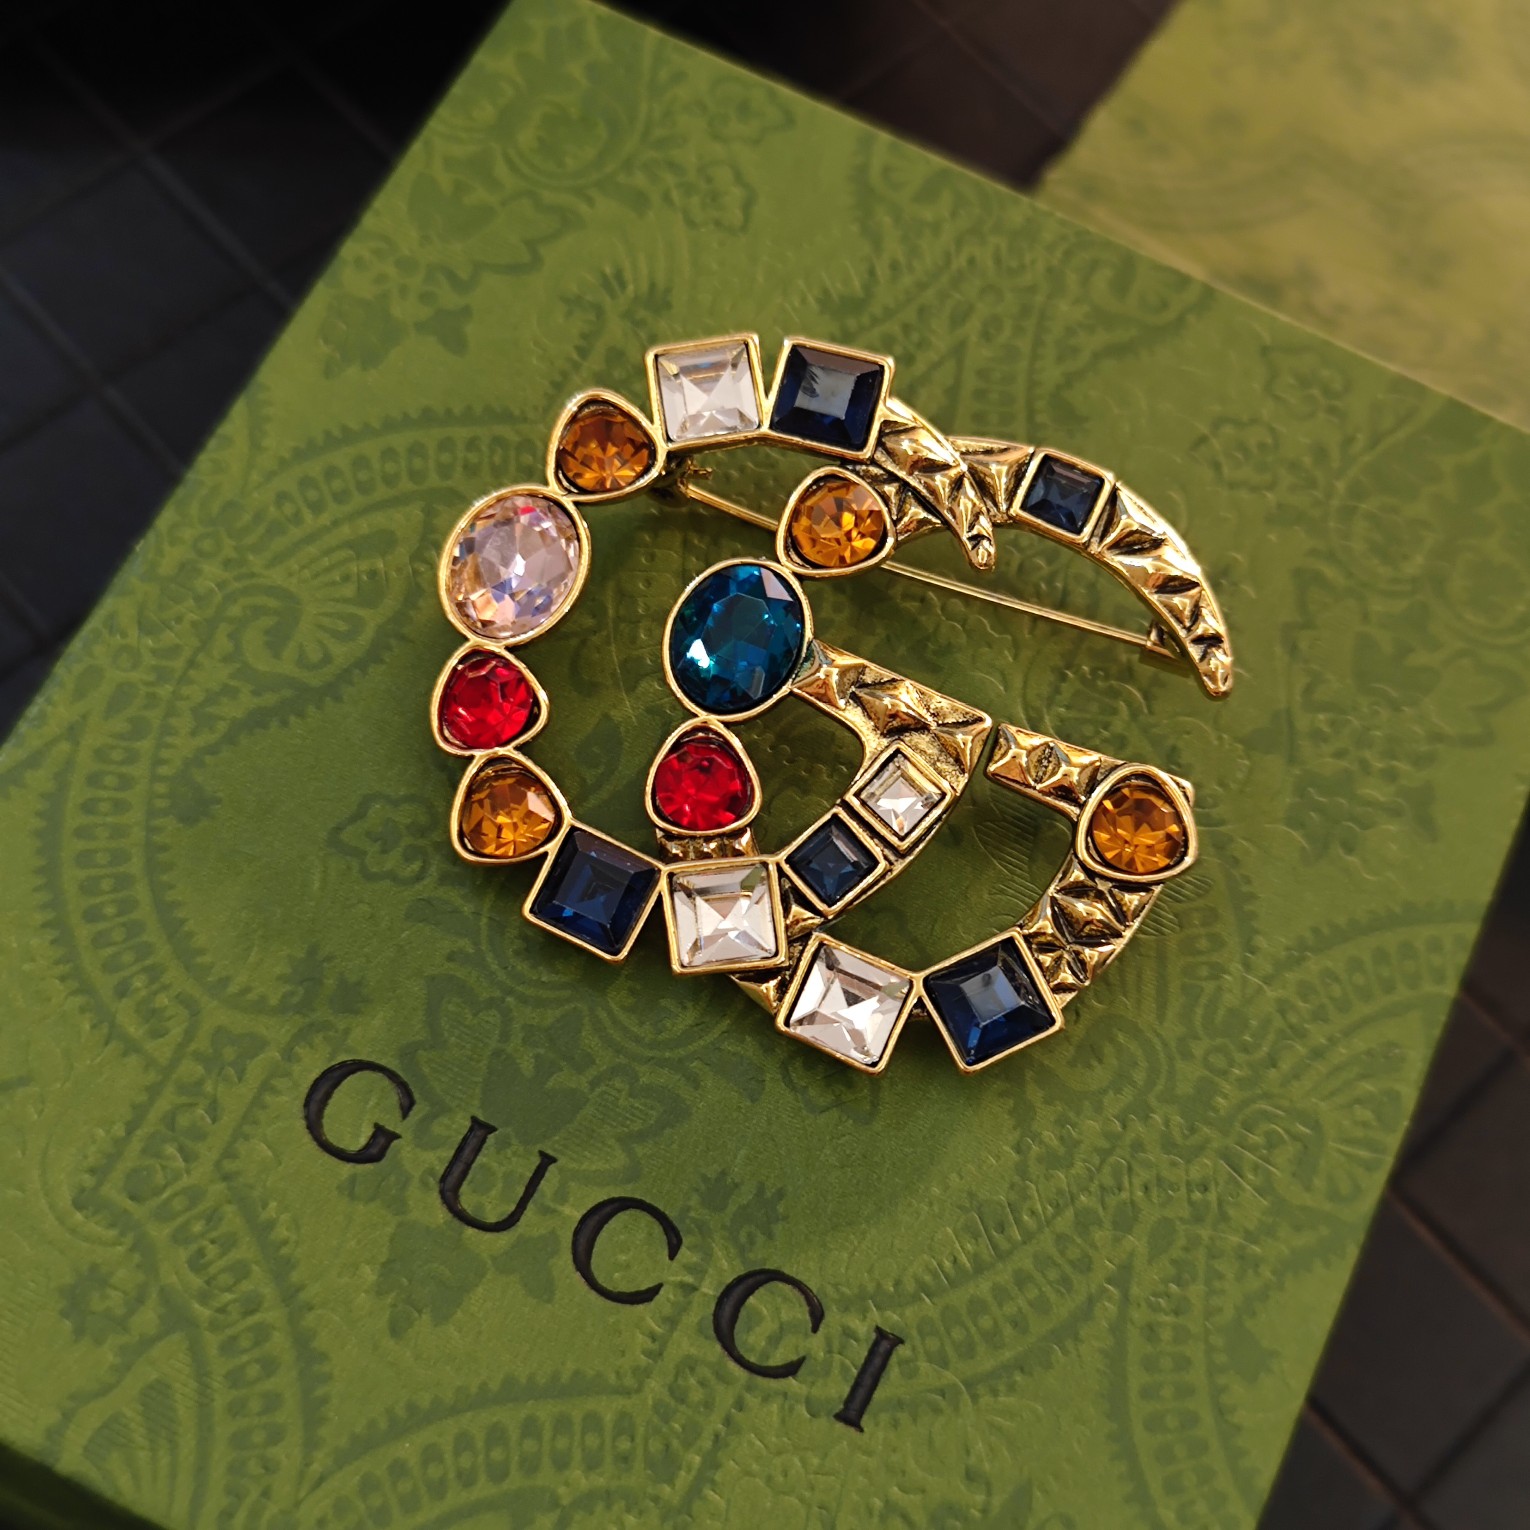 00404 Gucci brooch